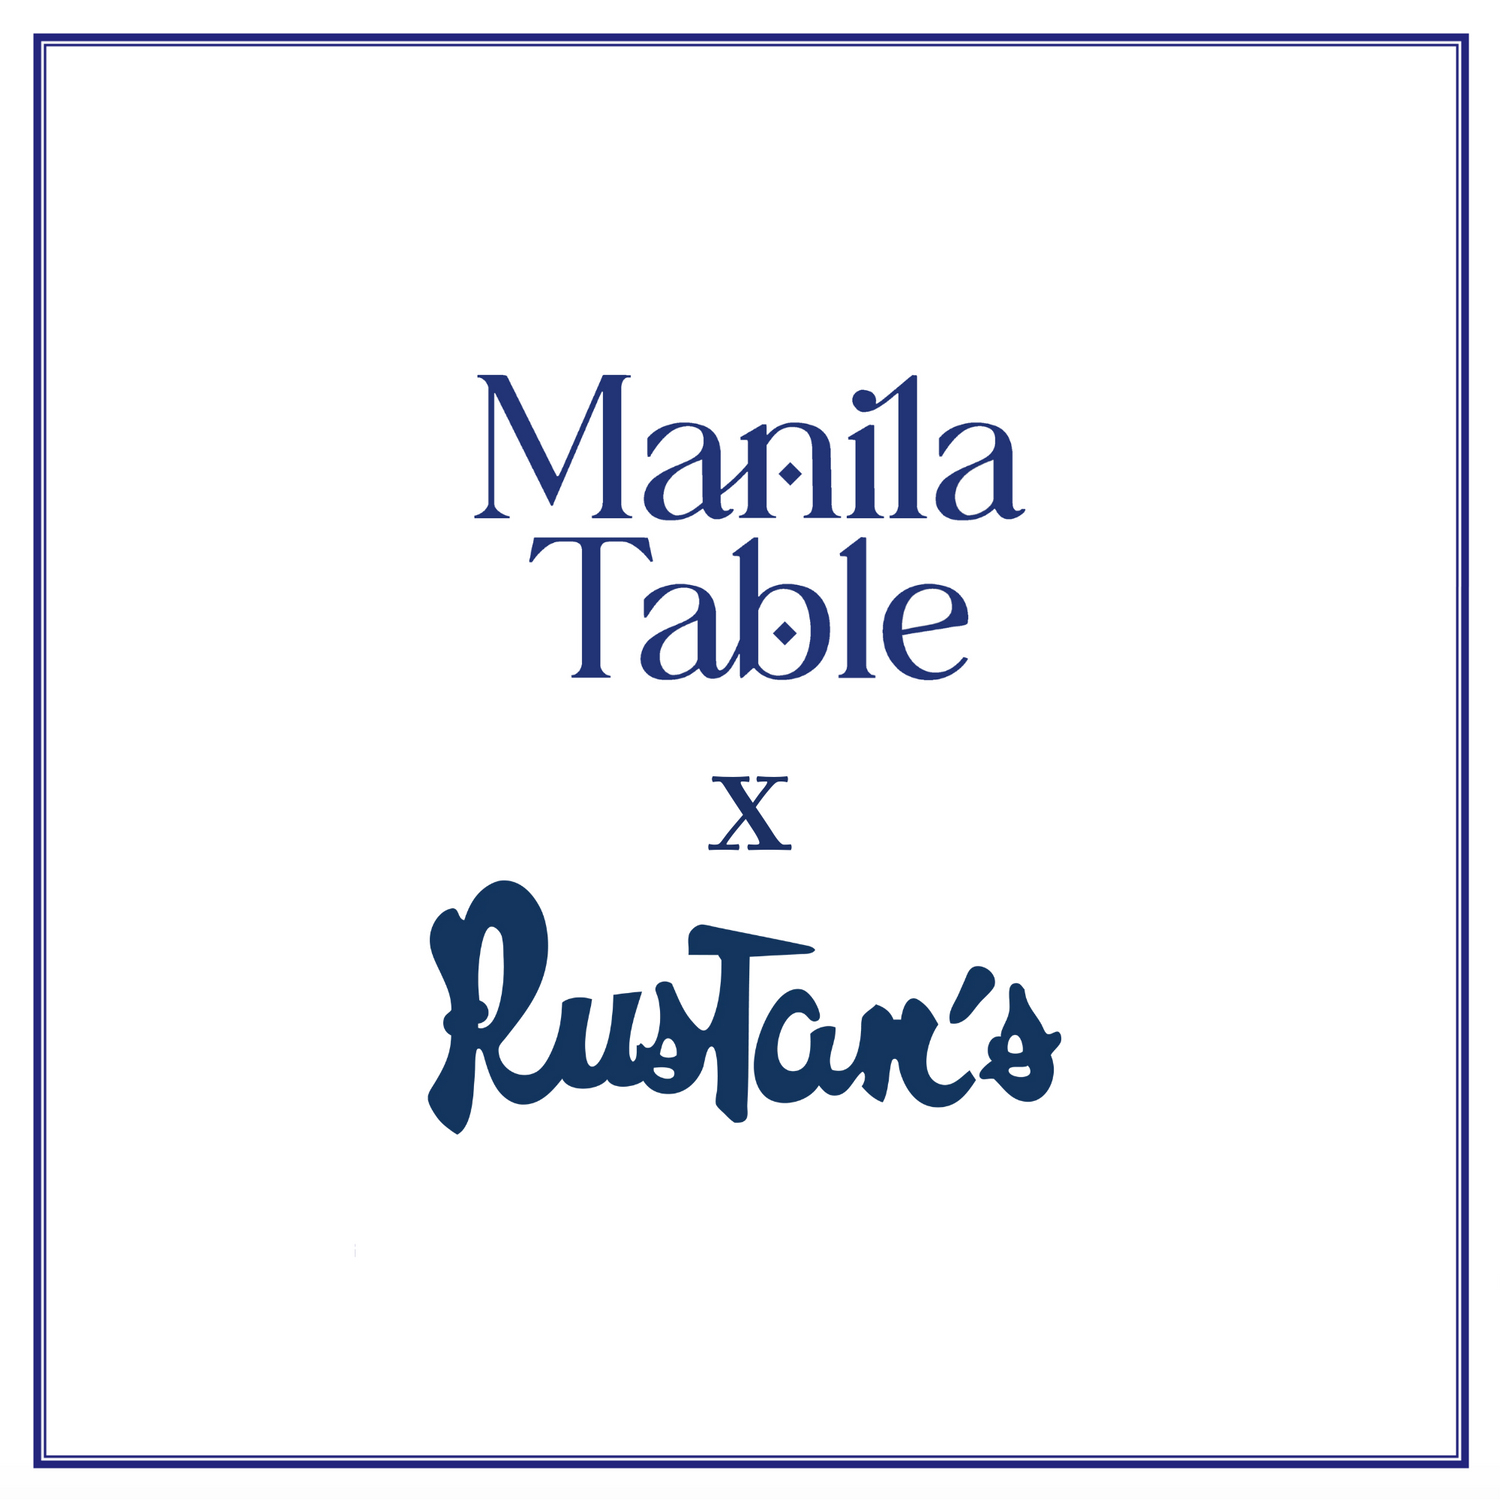 Manila Table x Rustans: For Personalization